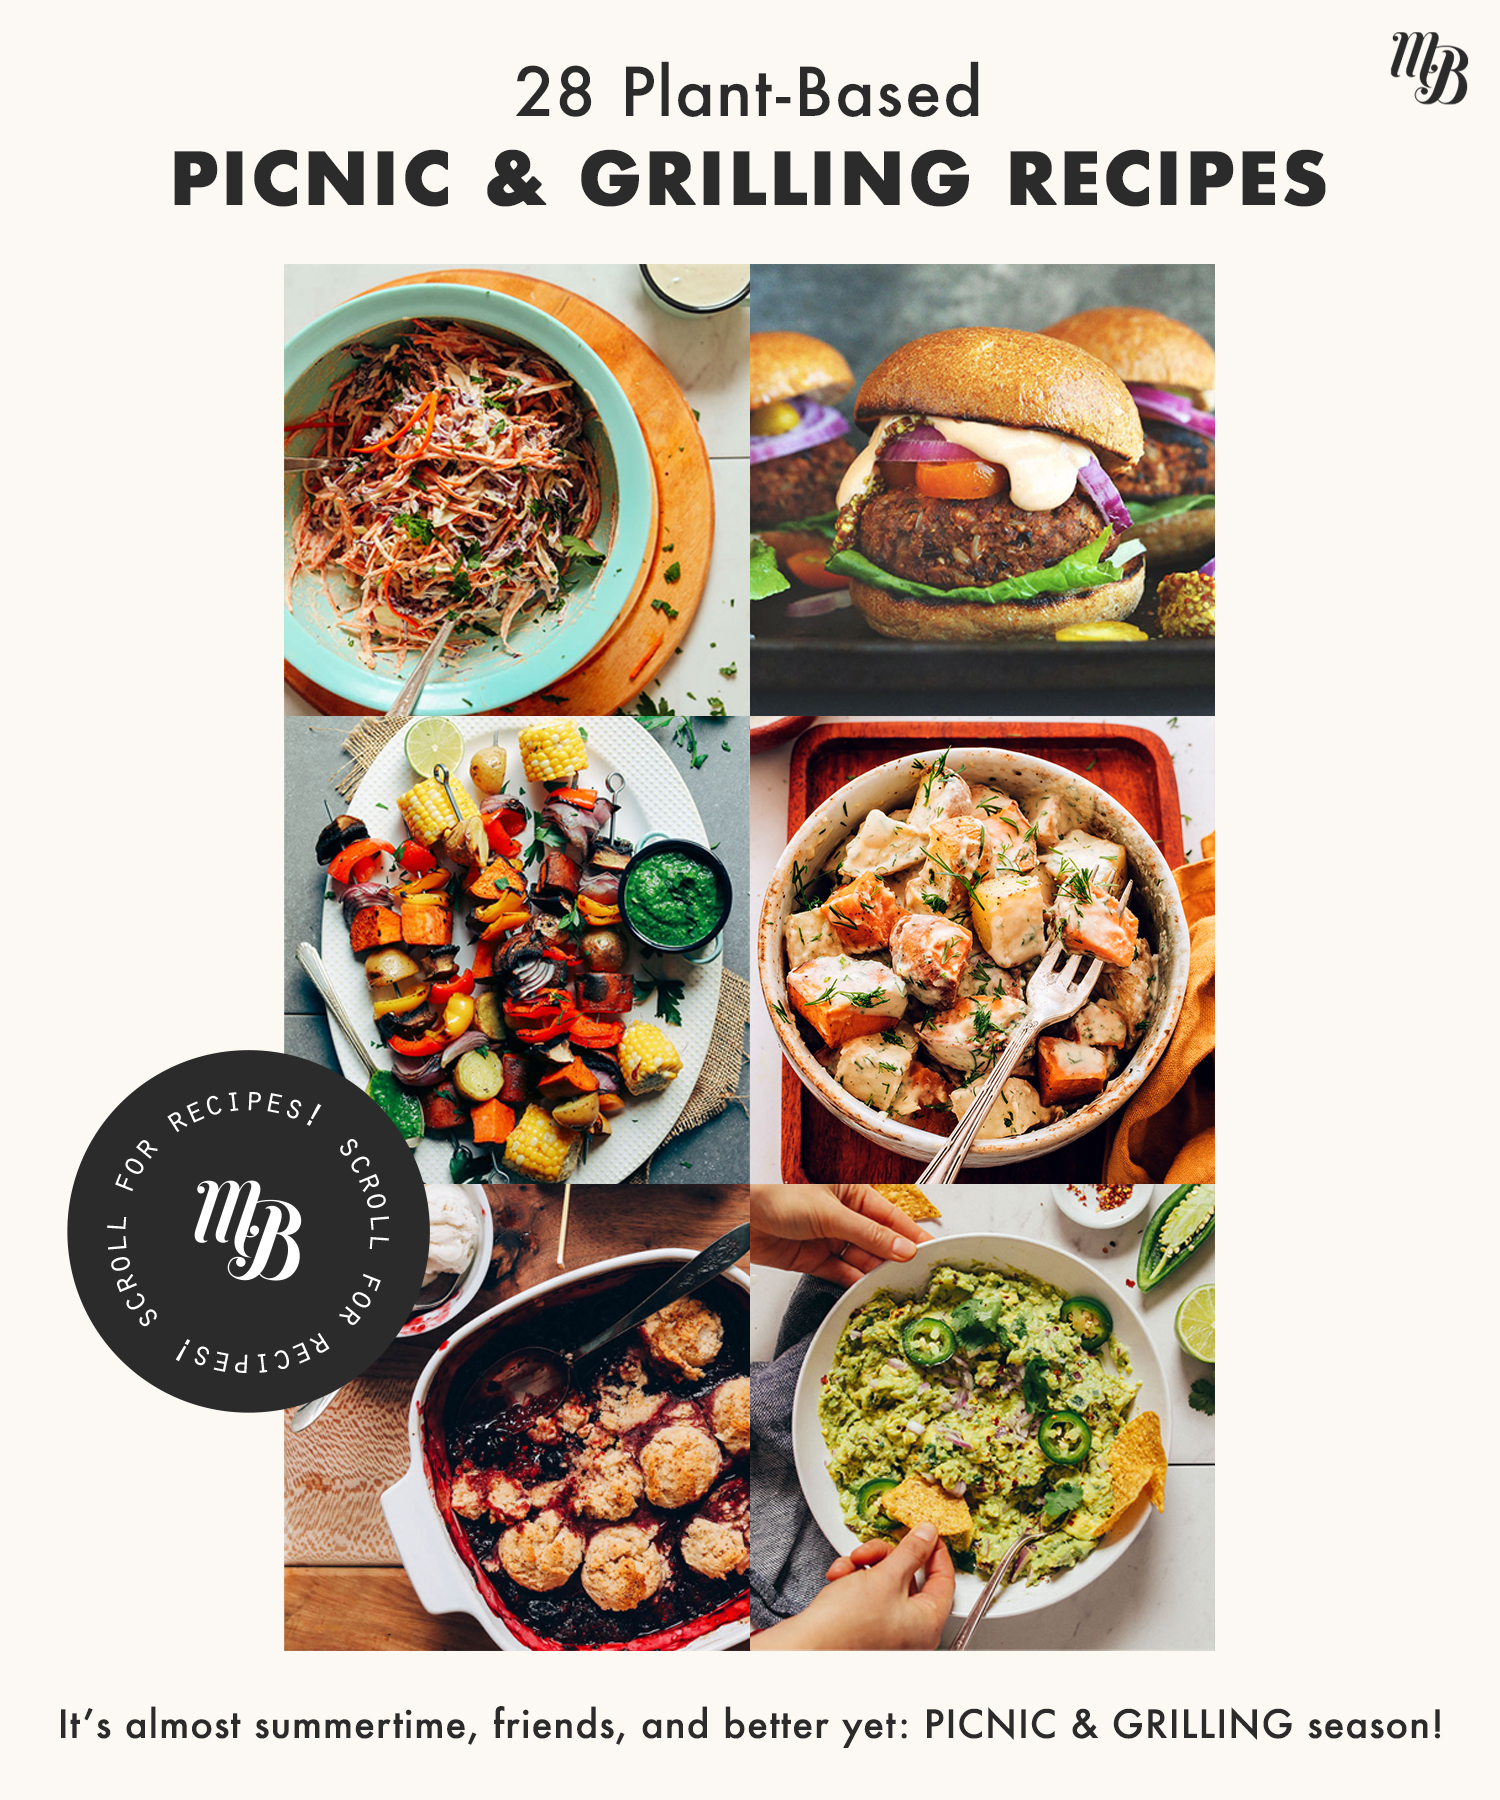 Slaw, vegan burgers, potato salad, cobbler, and other picnic and grilling recipes